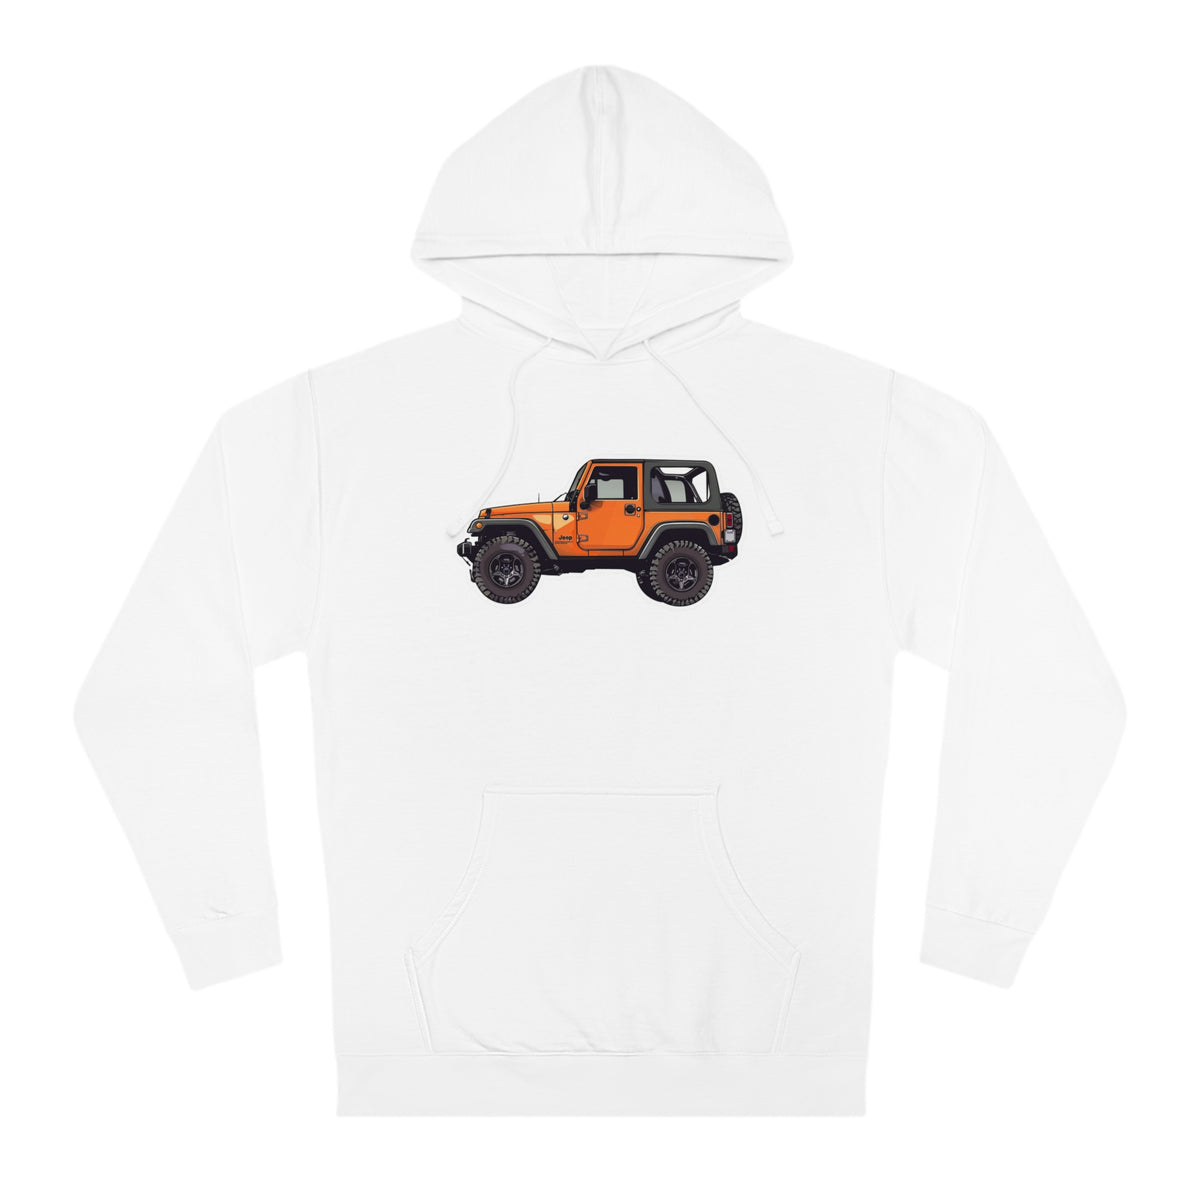 Off-Road Pioneer Hoodie with Classic Jeep Graphic Hooded Sweatshirt